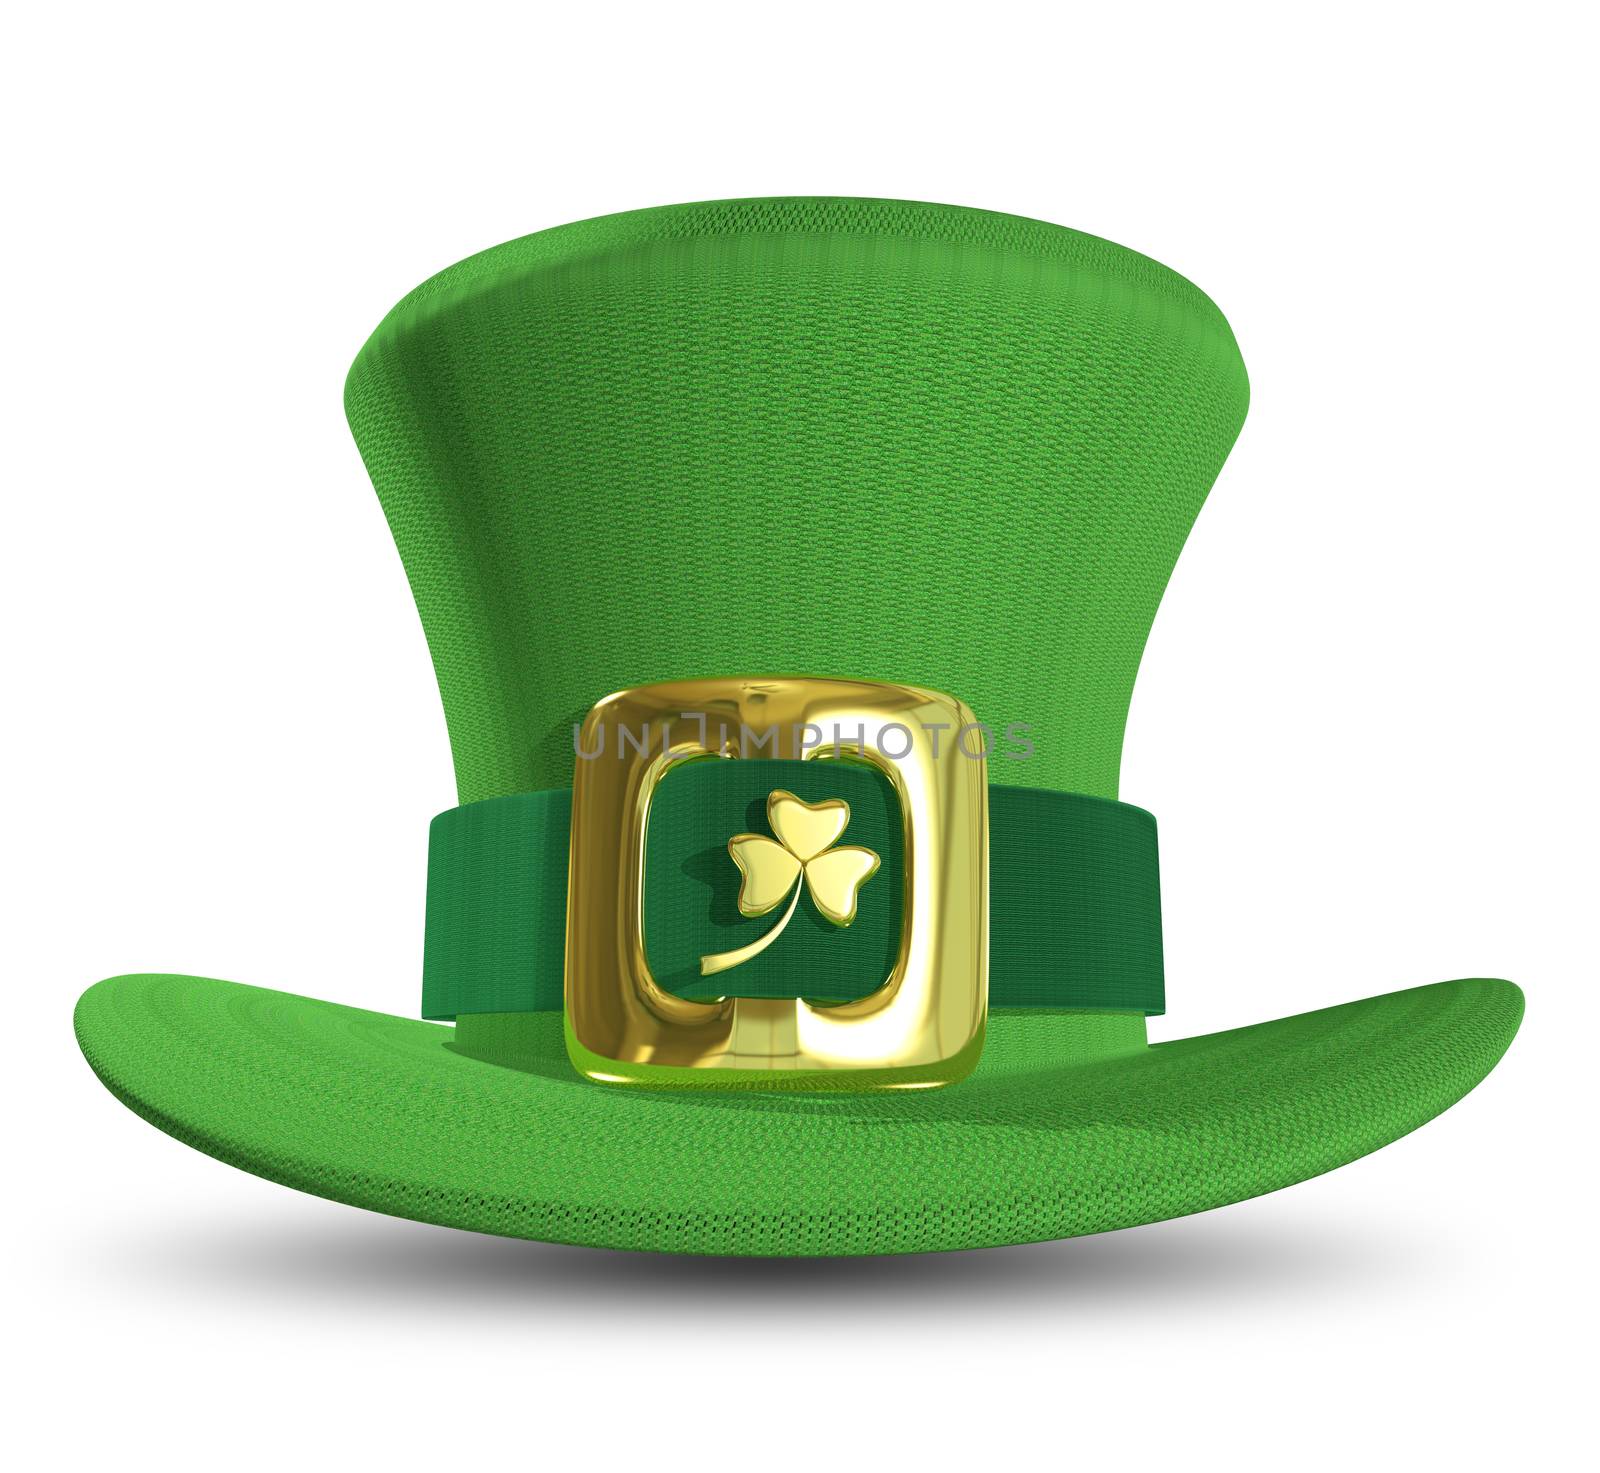 Illustration a green St. Patrick's Day hat